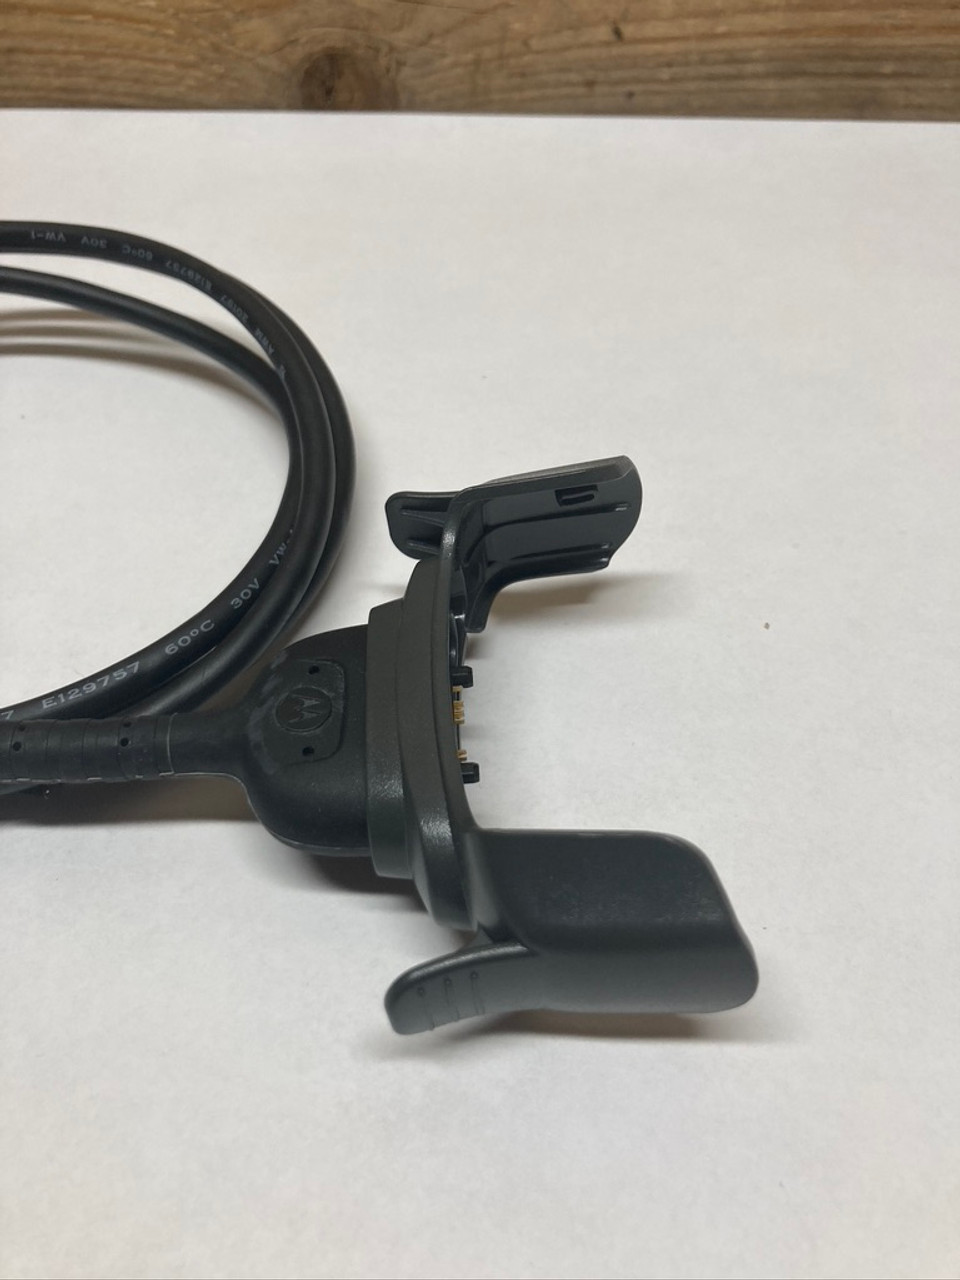 USB Charging Cable Assembly 25-102775-02R Zebra Symbol Motorola Barcode Scanner